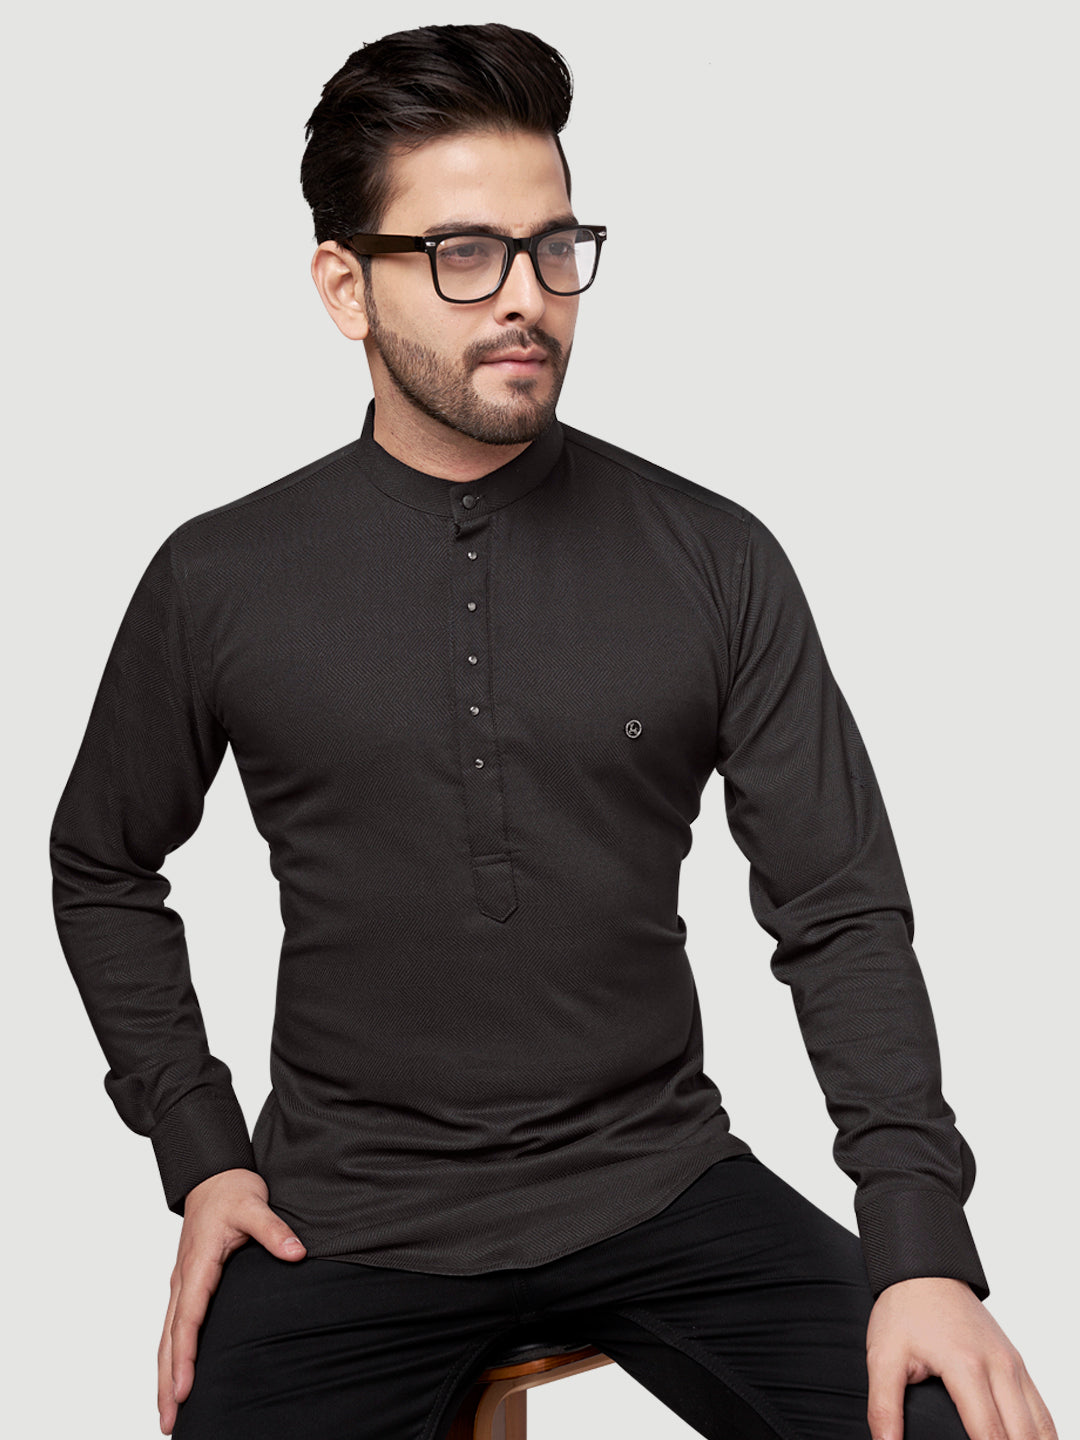 Black and White Shirts Men's Designer Short Kurta with Metal Buttons Black